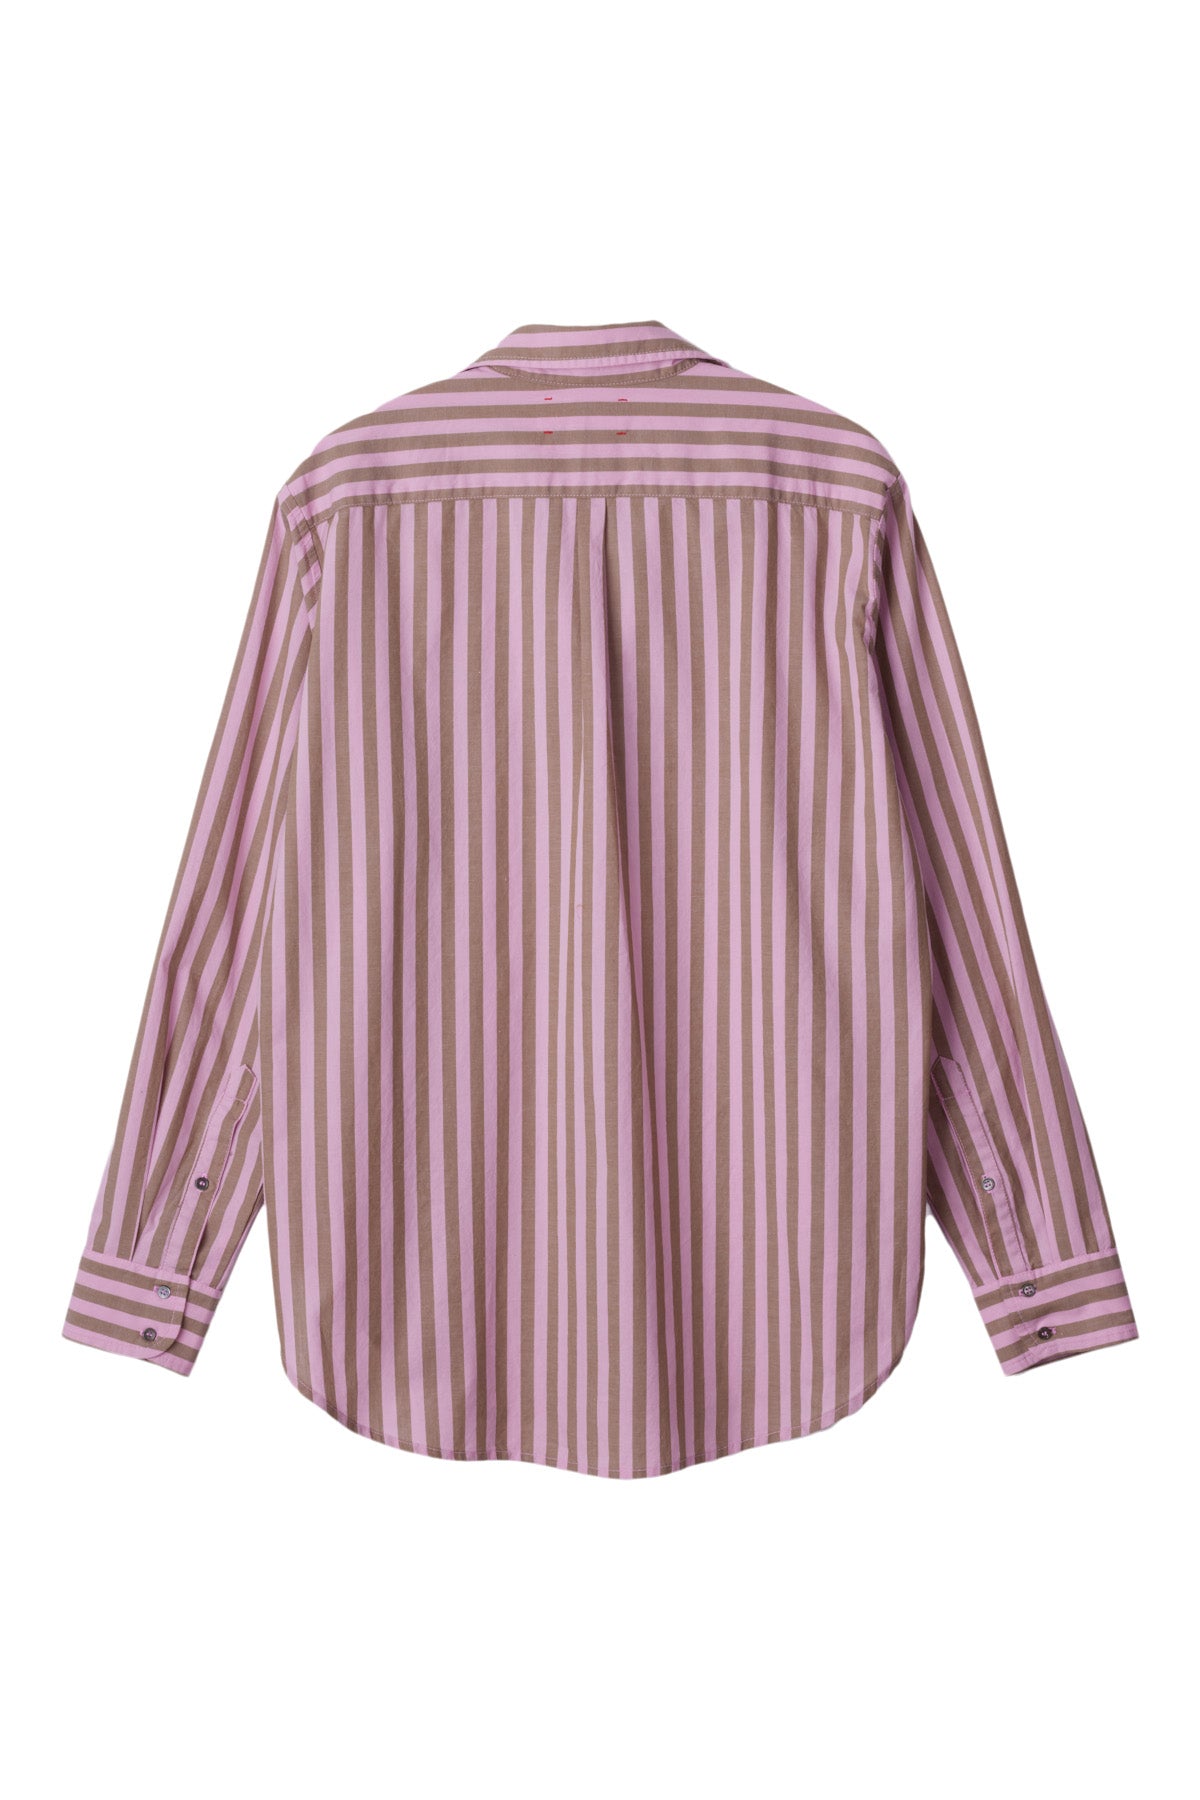 Xirena Beau Shirt in Fig Stripe